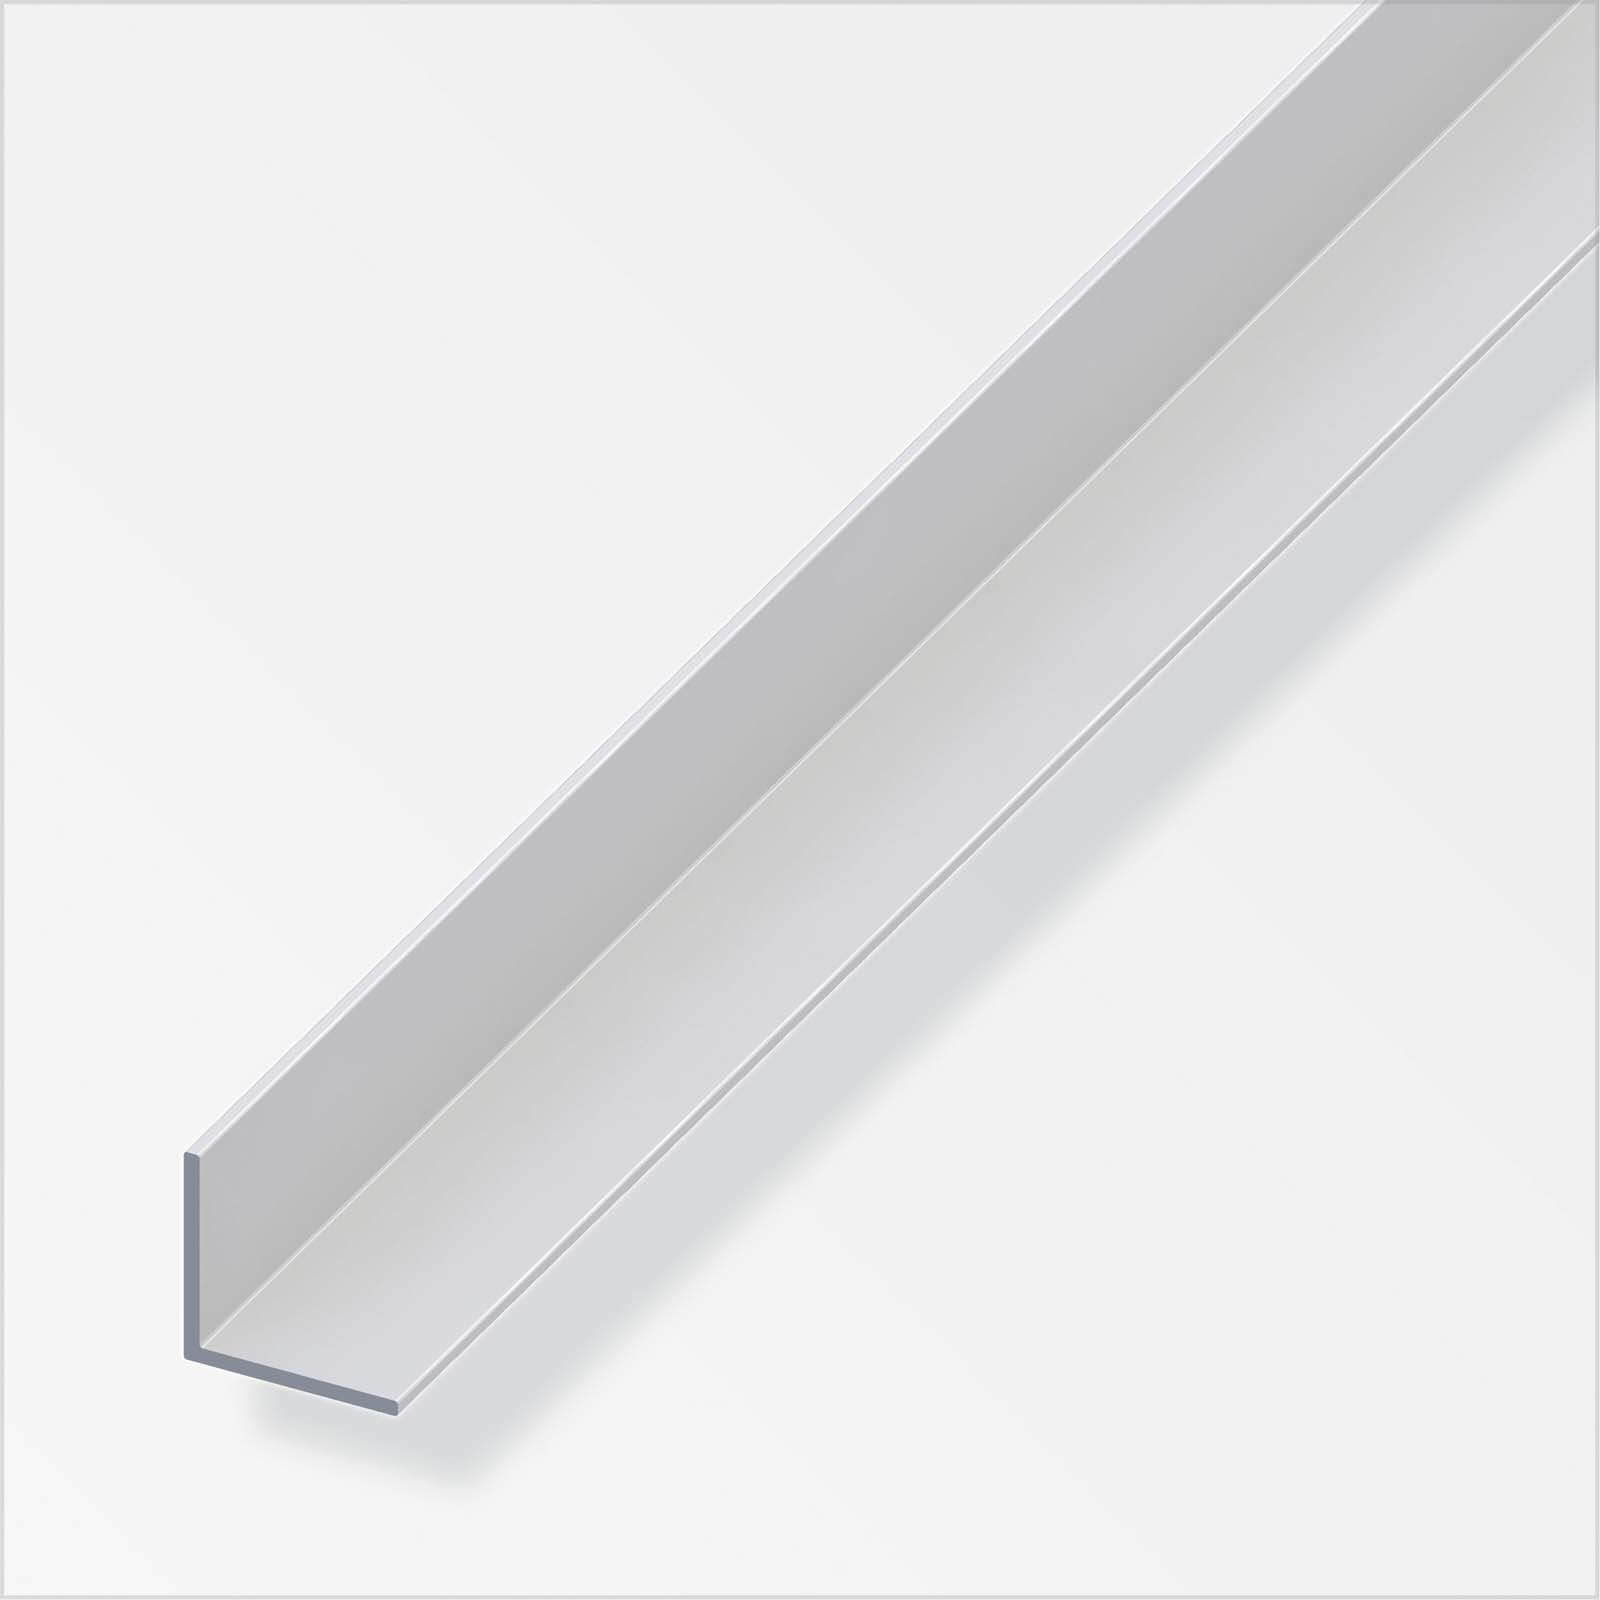 Photo of Anodised Aluminium Equal Angle Profile - 2m X 20 X 20mm